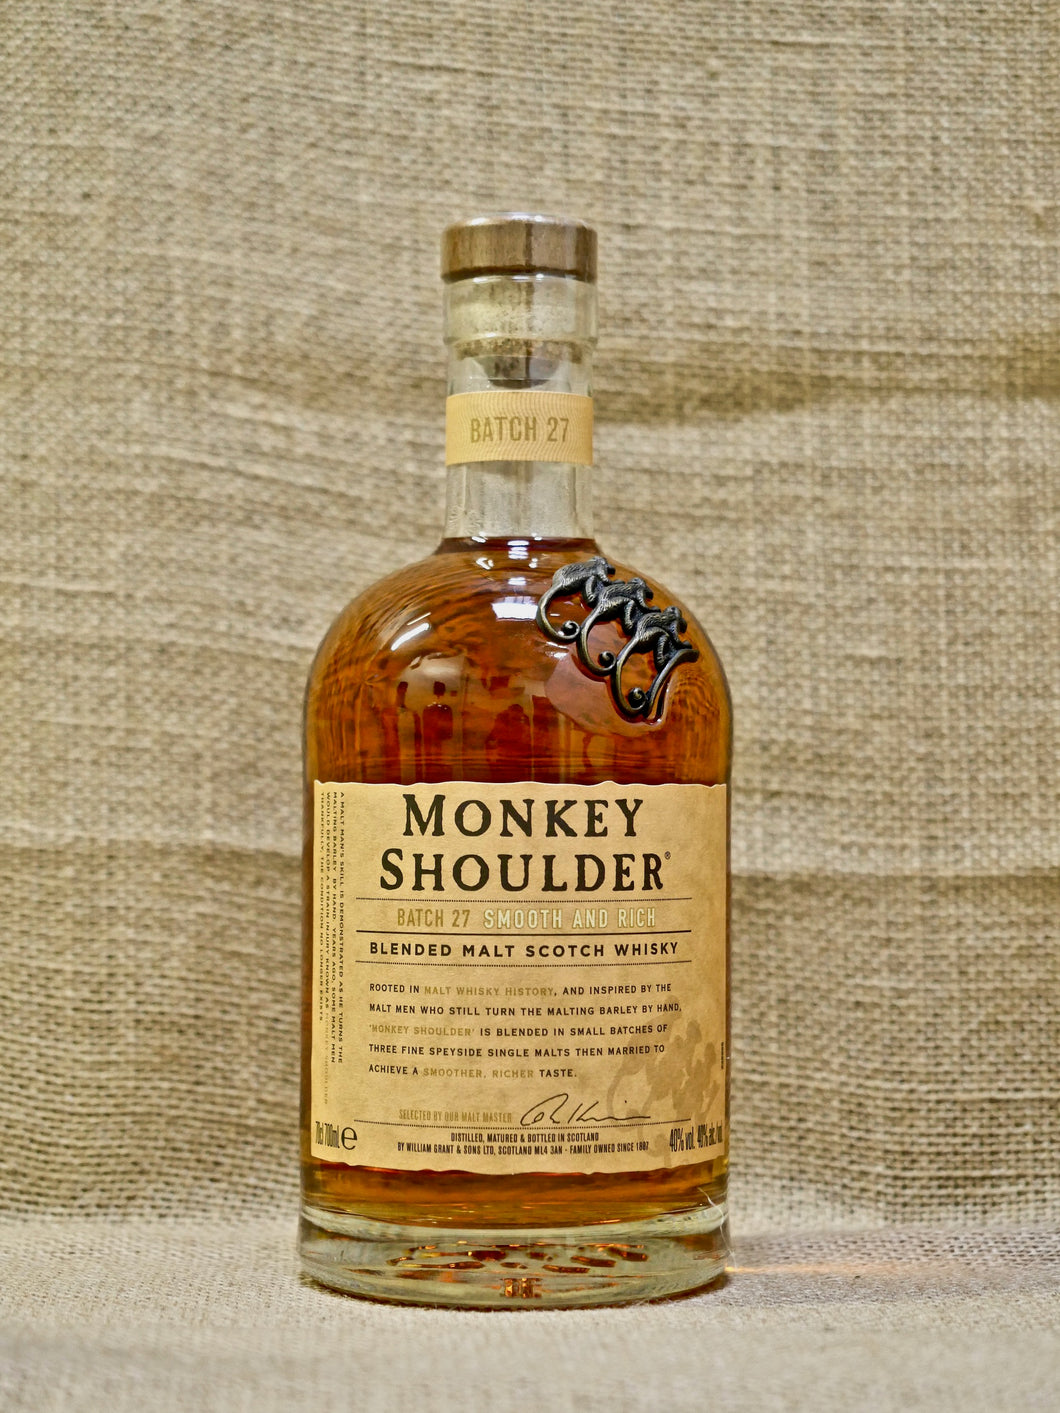 Monkey Shoulder Scotch Whisky